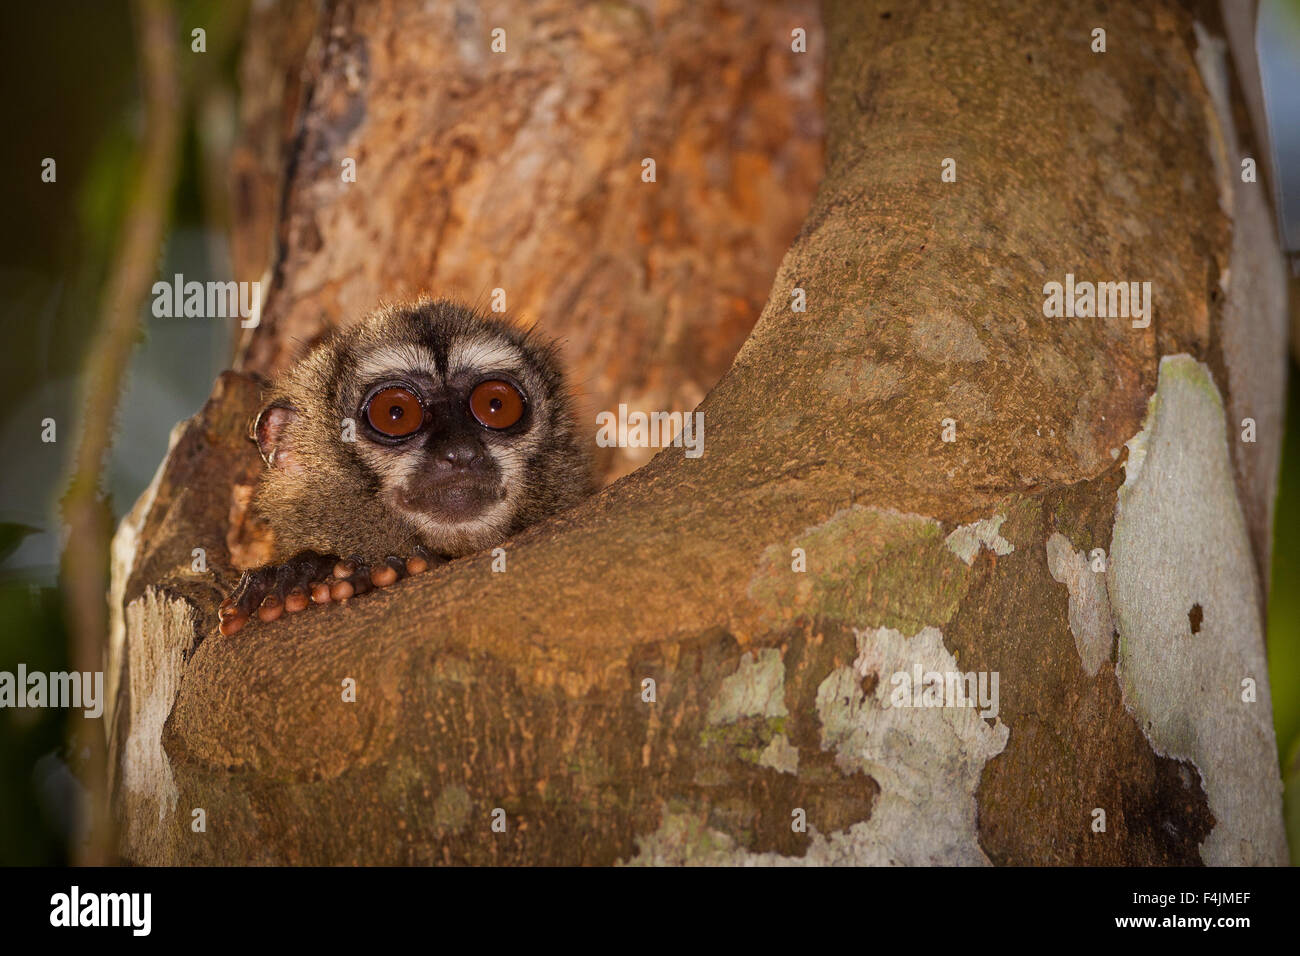 Panama wildlife with a panamanian night monkey, Aoutus zonalis, in a treehole inside the rainforest of Soberania national park, Republic of Panama. Stock Photo